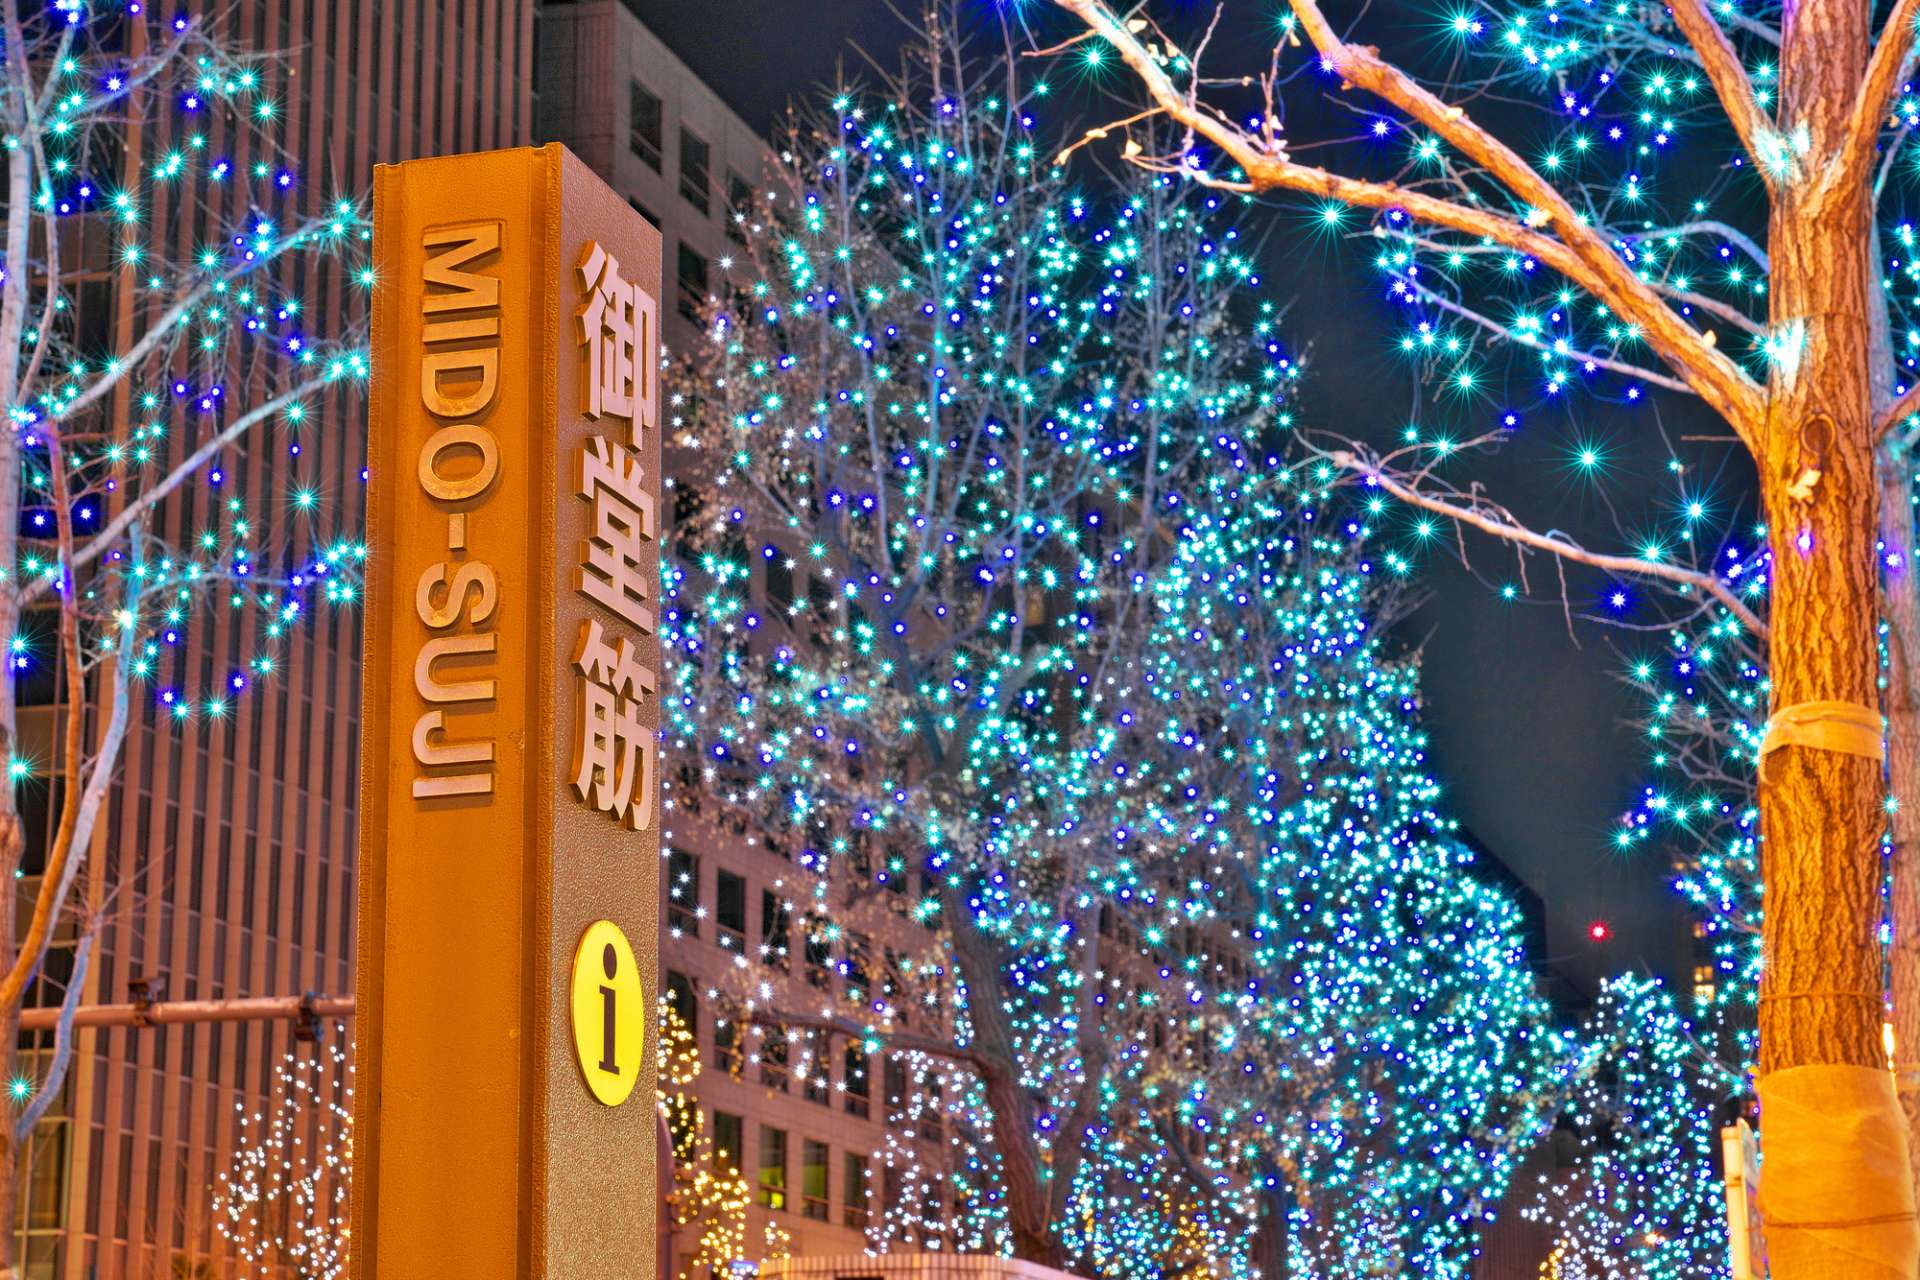 This Symbolic Street Illumination Gently Wraps the People of Osaka in Light.